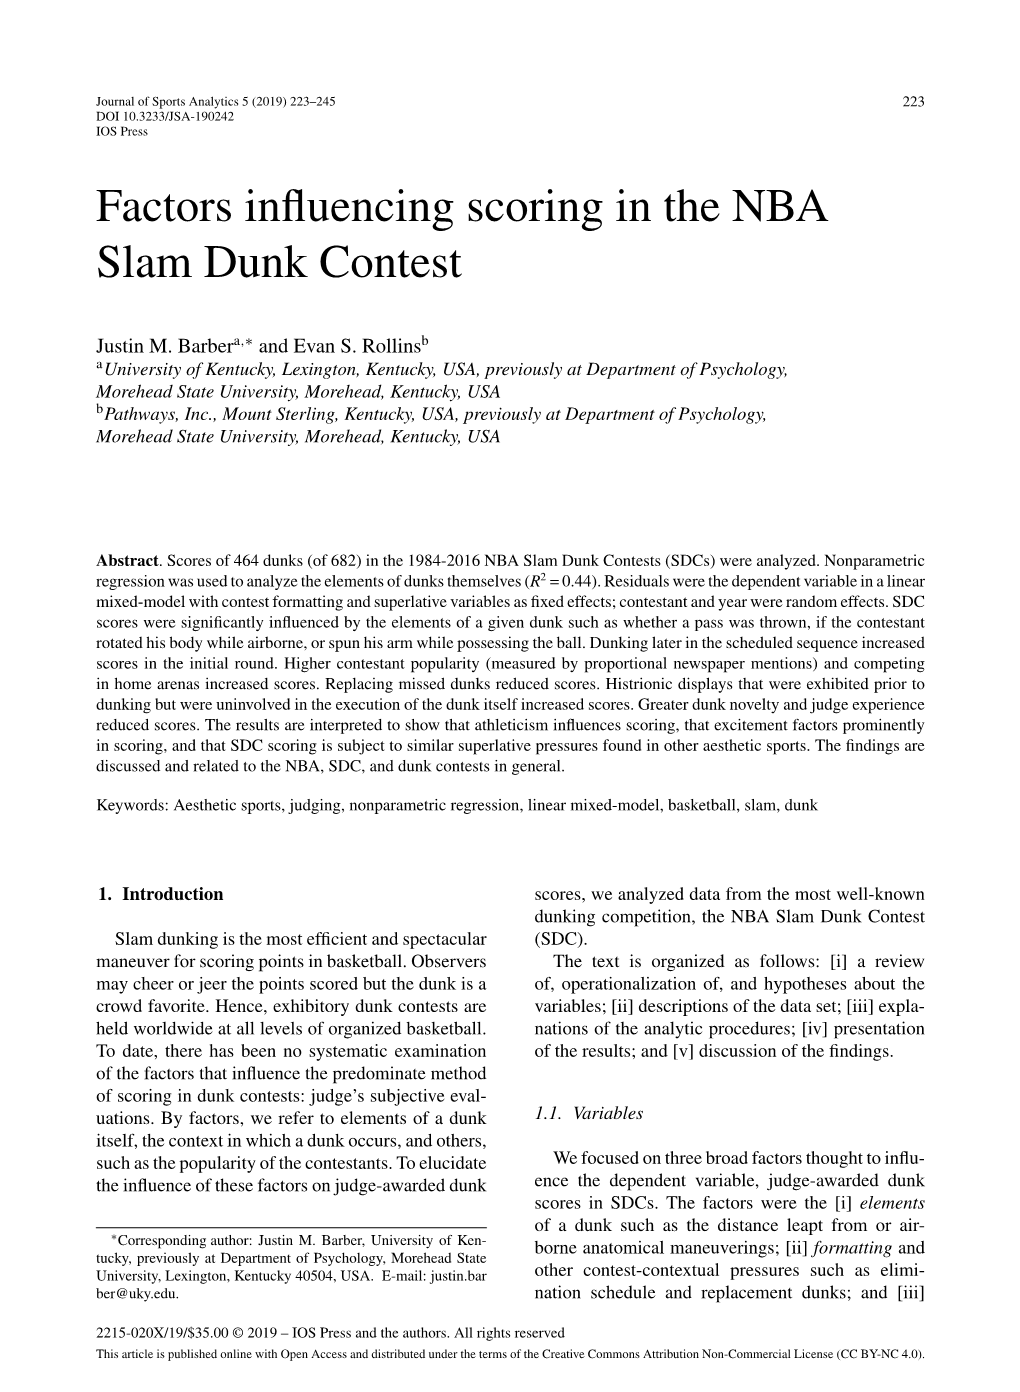 Factors Influencing Scoring in the NBA Slam Dunk Contest